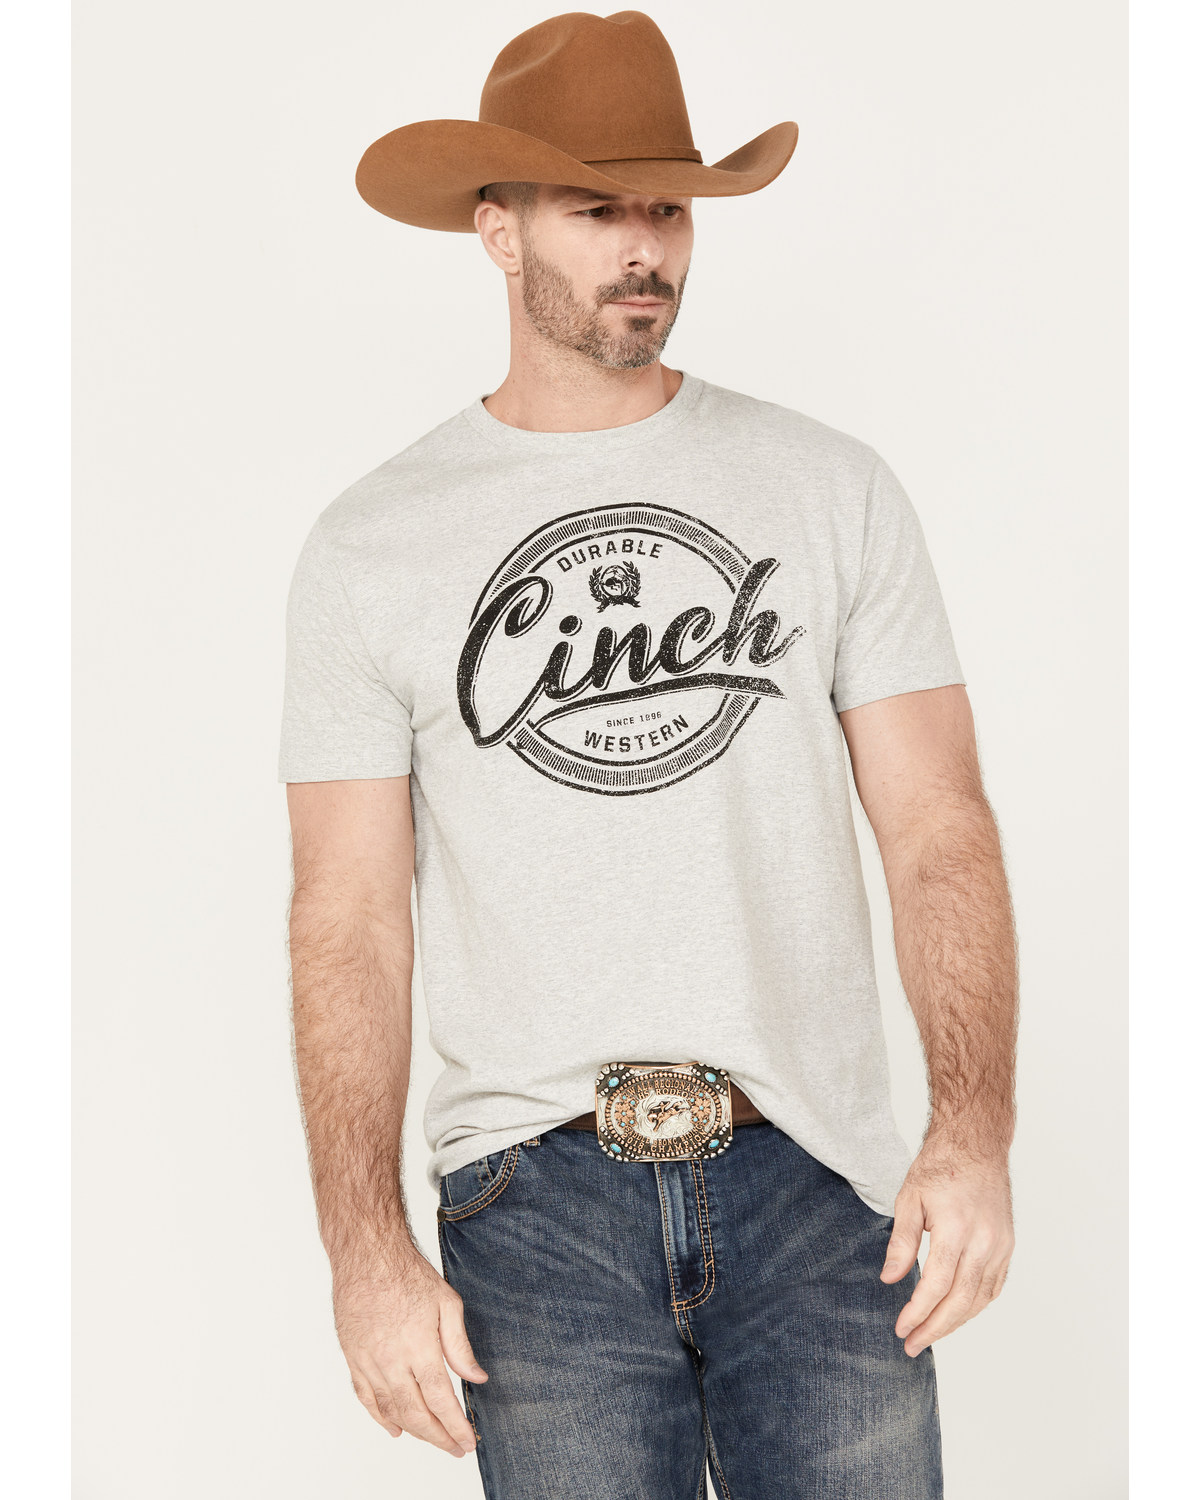 Cinch Men's Durable Short Sleeve Graphic T-Shirt